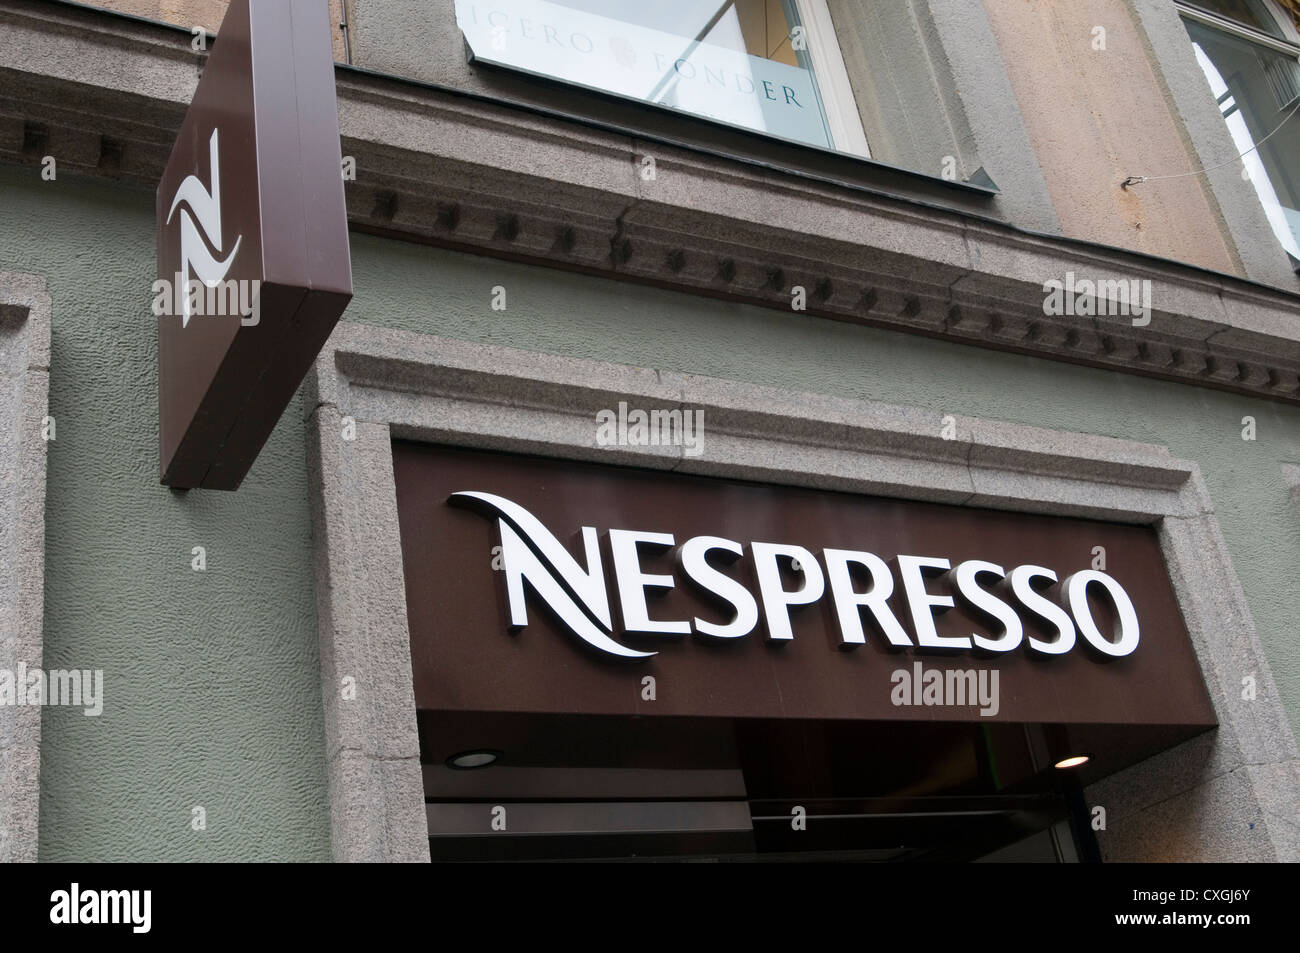 nespresso coffee cafe cafe's nestle brand Stock Photo - Alamy